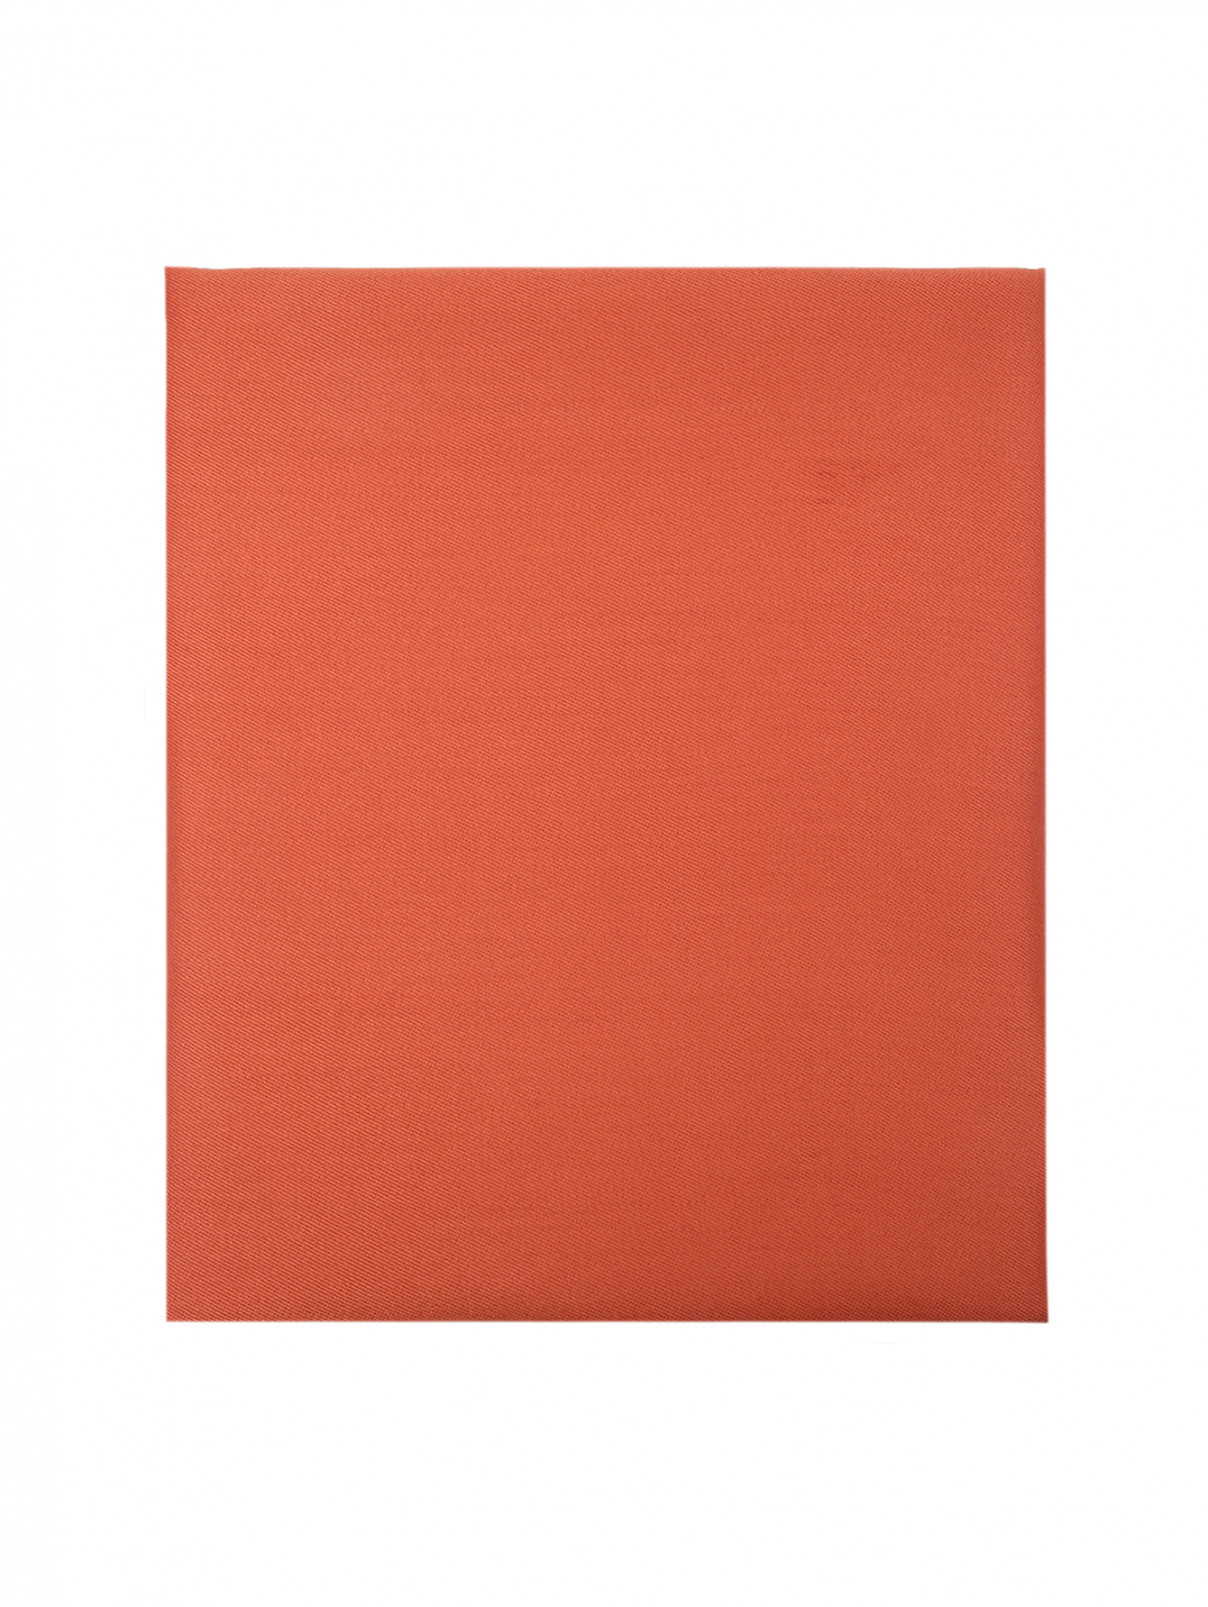 Шарф из шелка с логотипом Max Mara  –  Общий вид  – Цвет:  Оранжевый